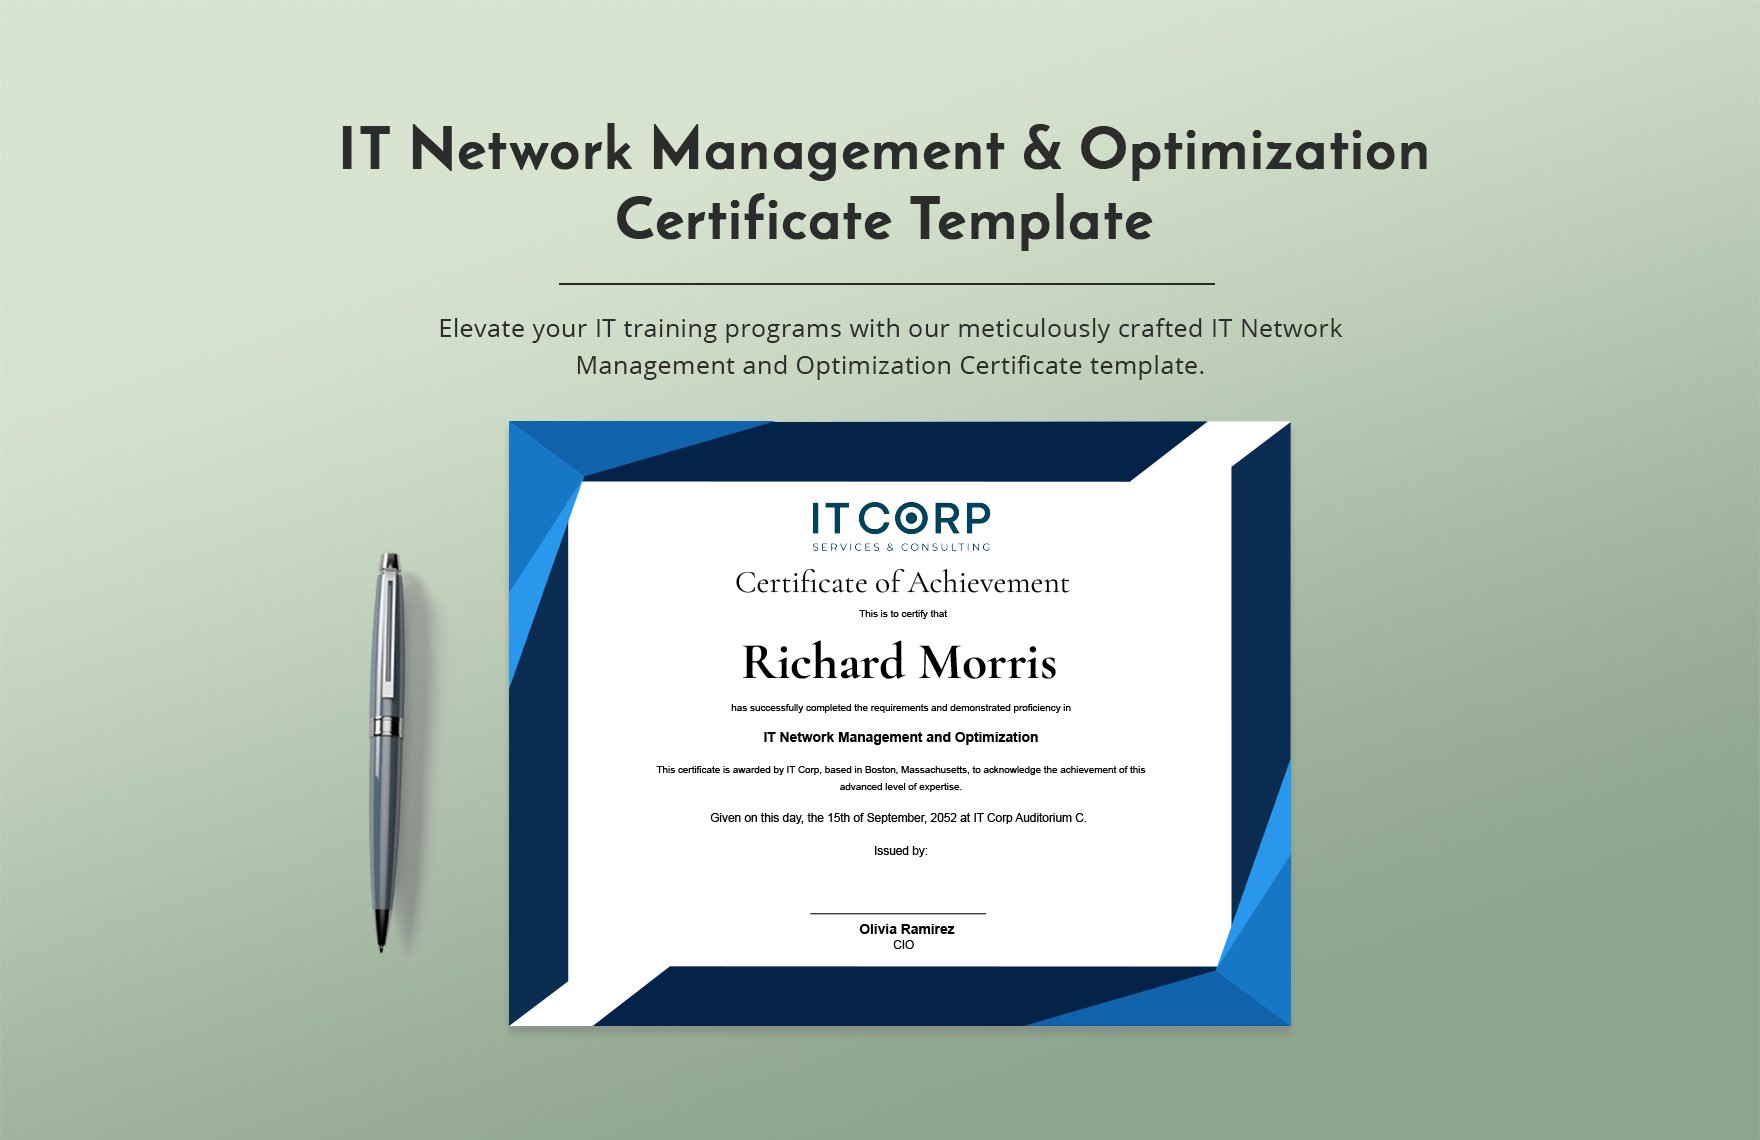 IT Network Management & Optimization Certificate Template